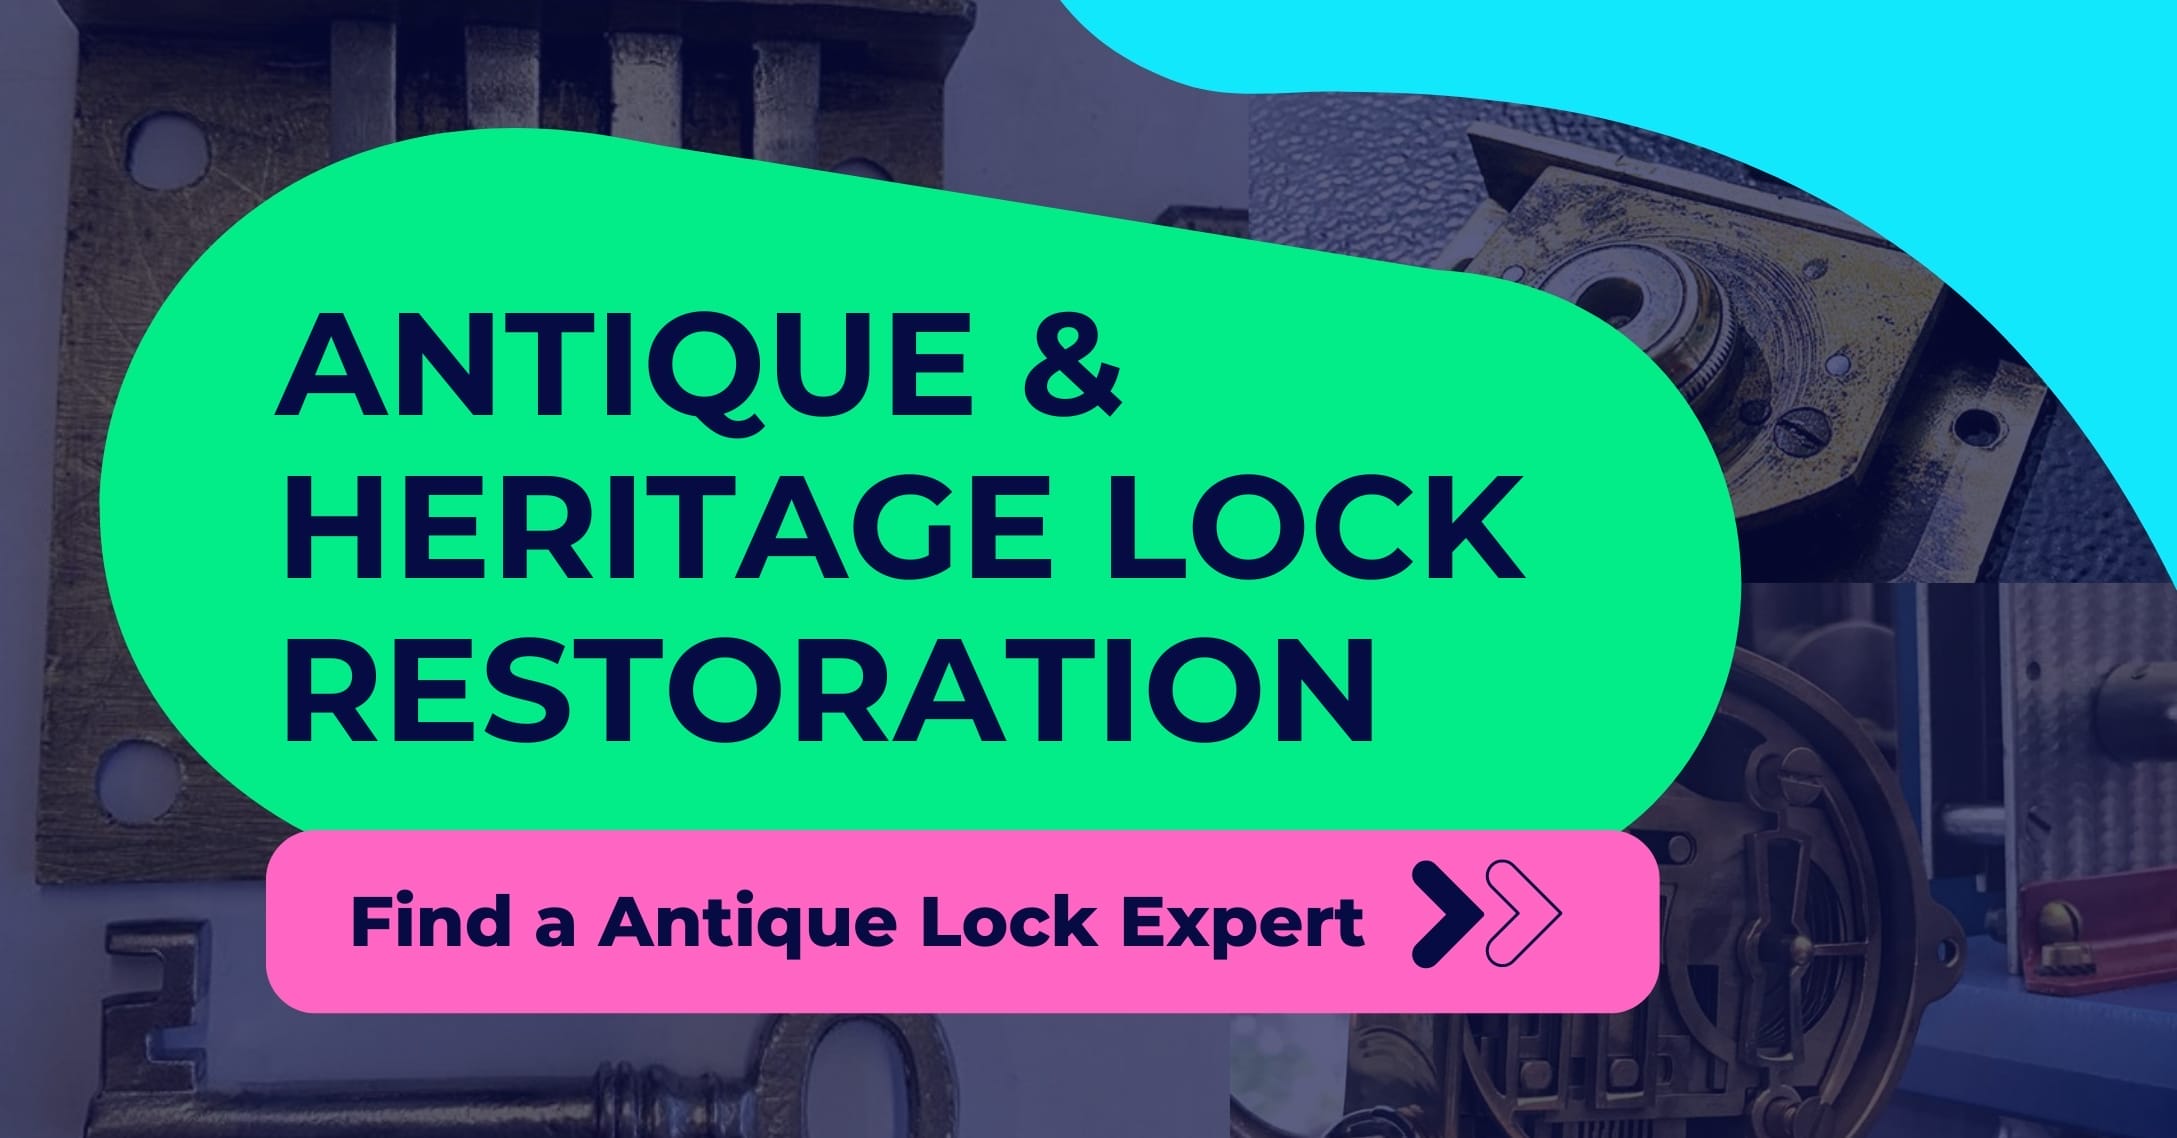 Antique Lock Key Repair and Restoration - Find a Antique Lock Expert Near You